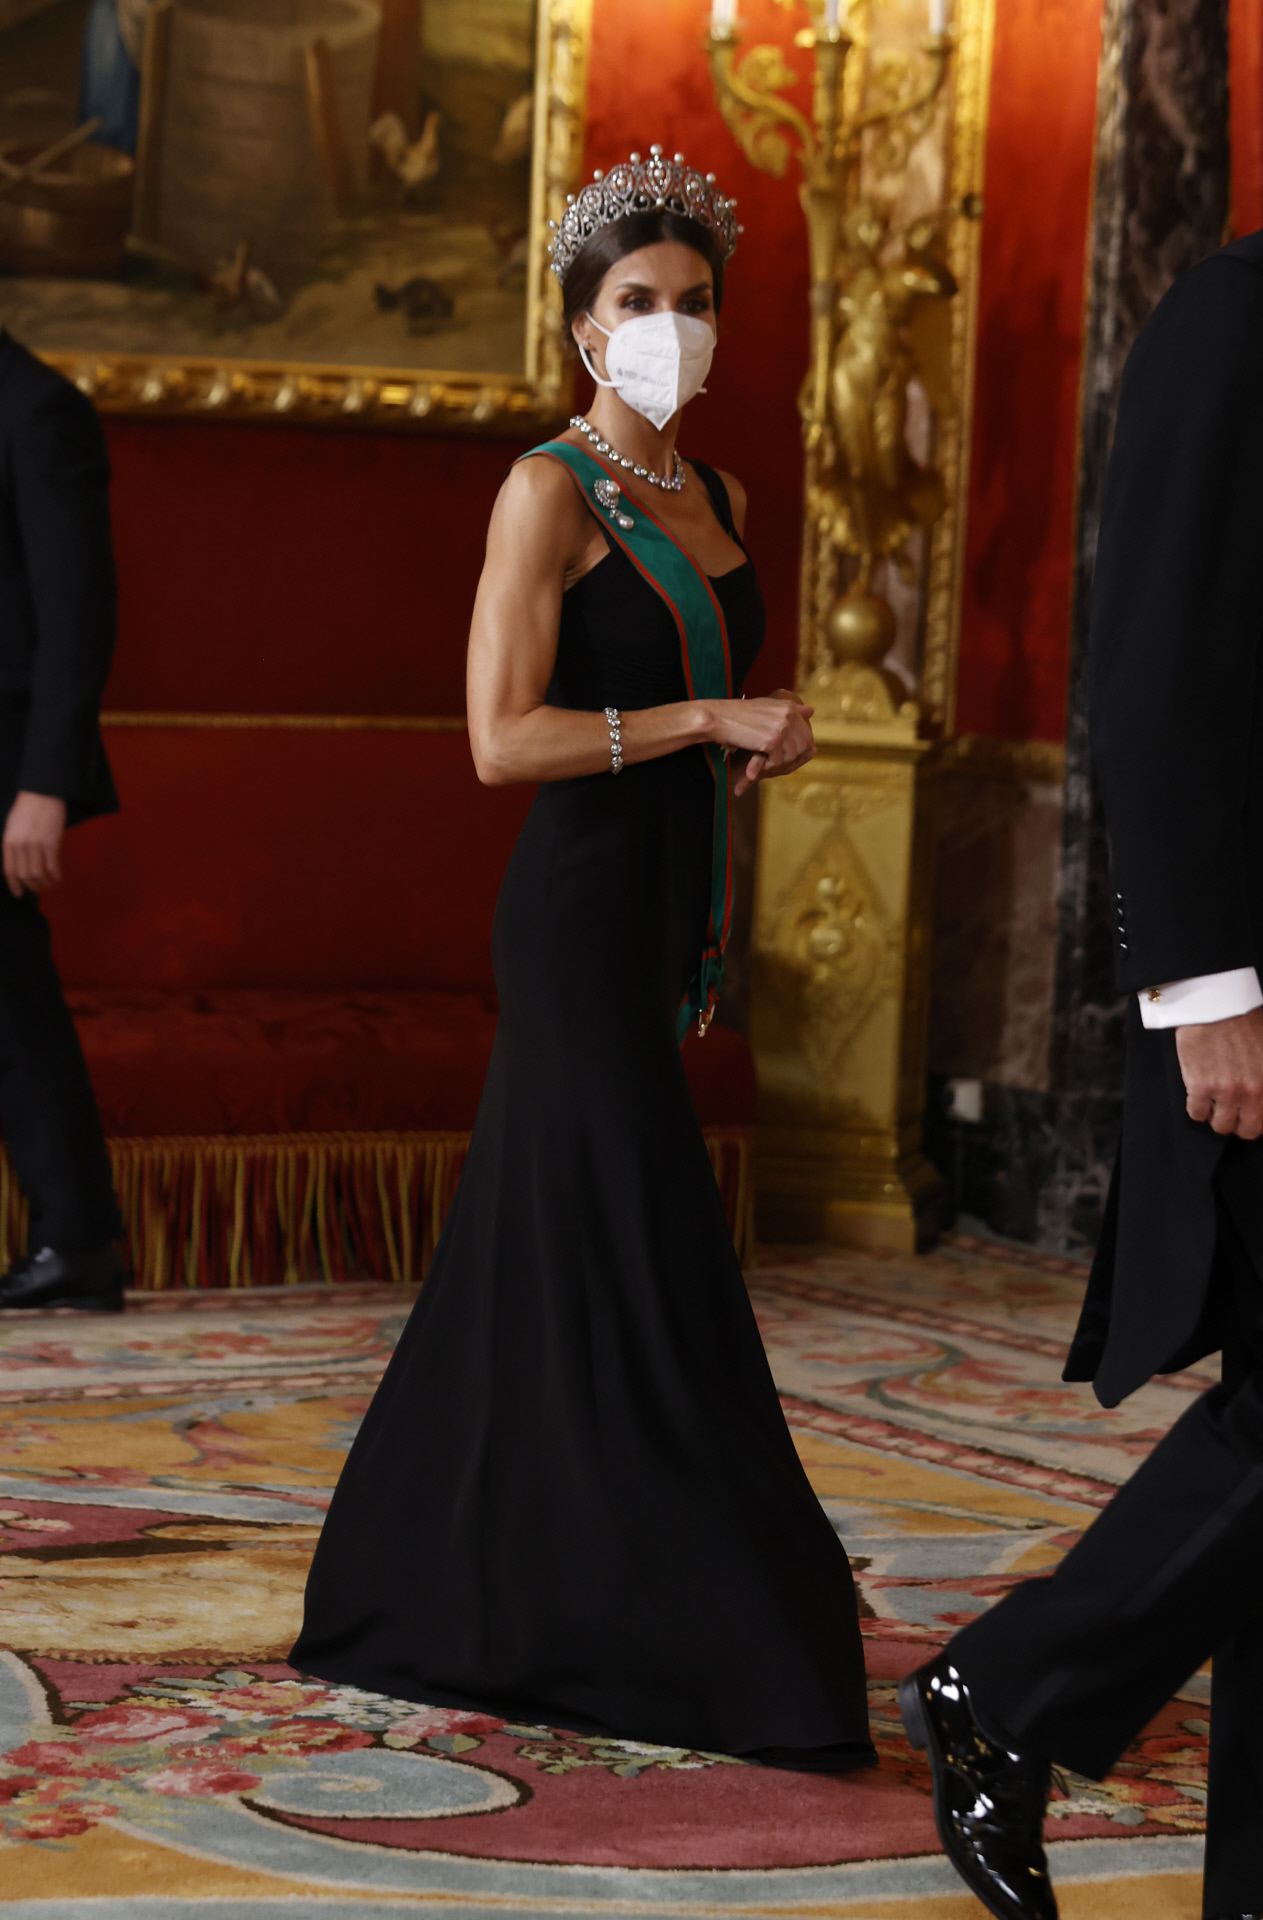 La reina Letizia celebra la vuelta de las cenas de gala con impresionantes joyas y un elegante vestido negro.